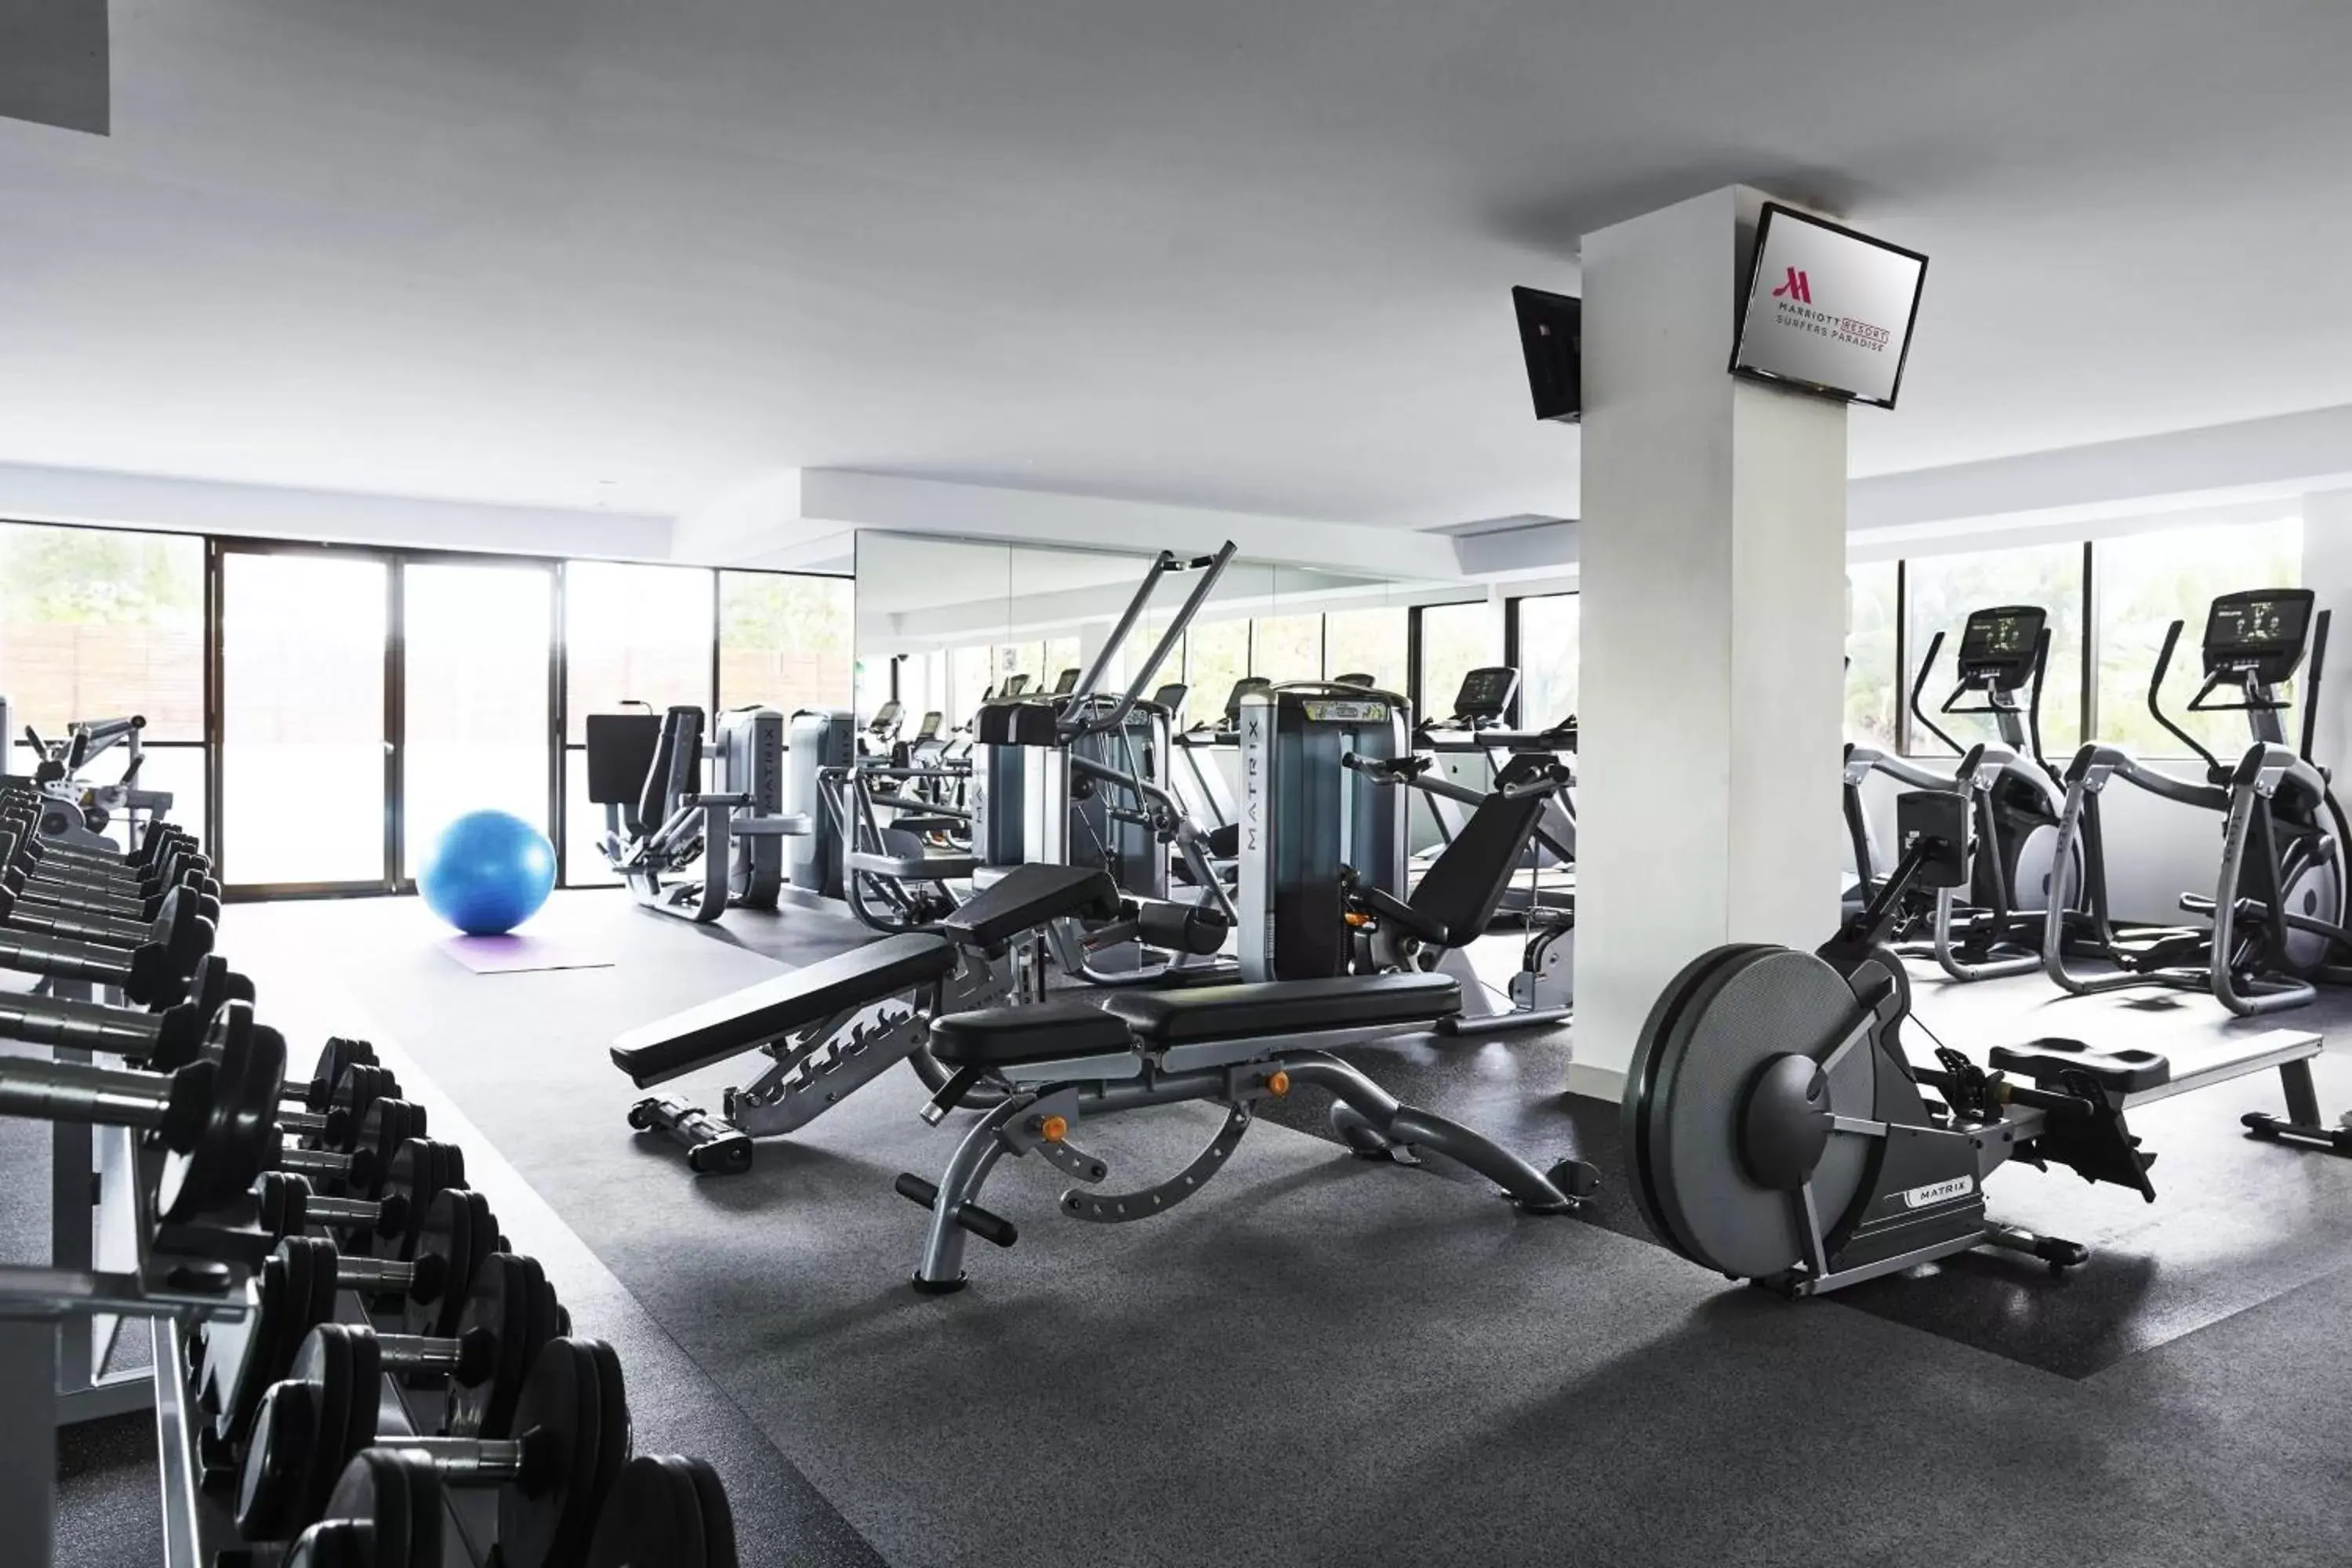 Fitness centre/facilities, Fitness Center/Facilities in JW Marriott Gold Coast Resort & Spa